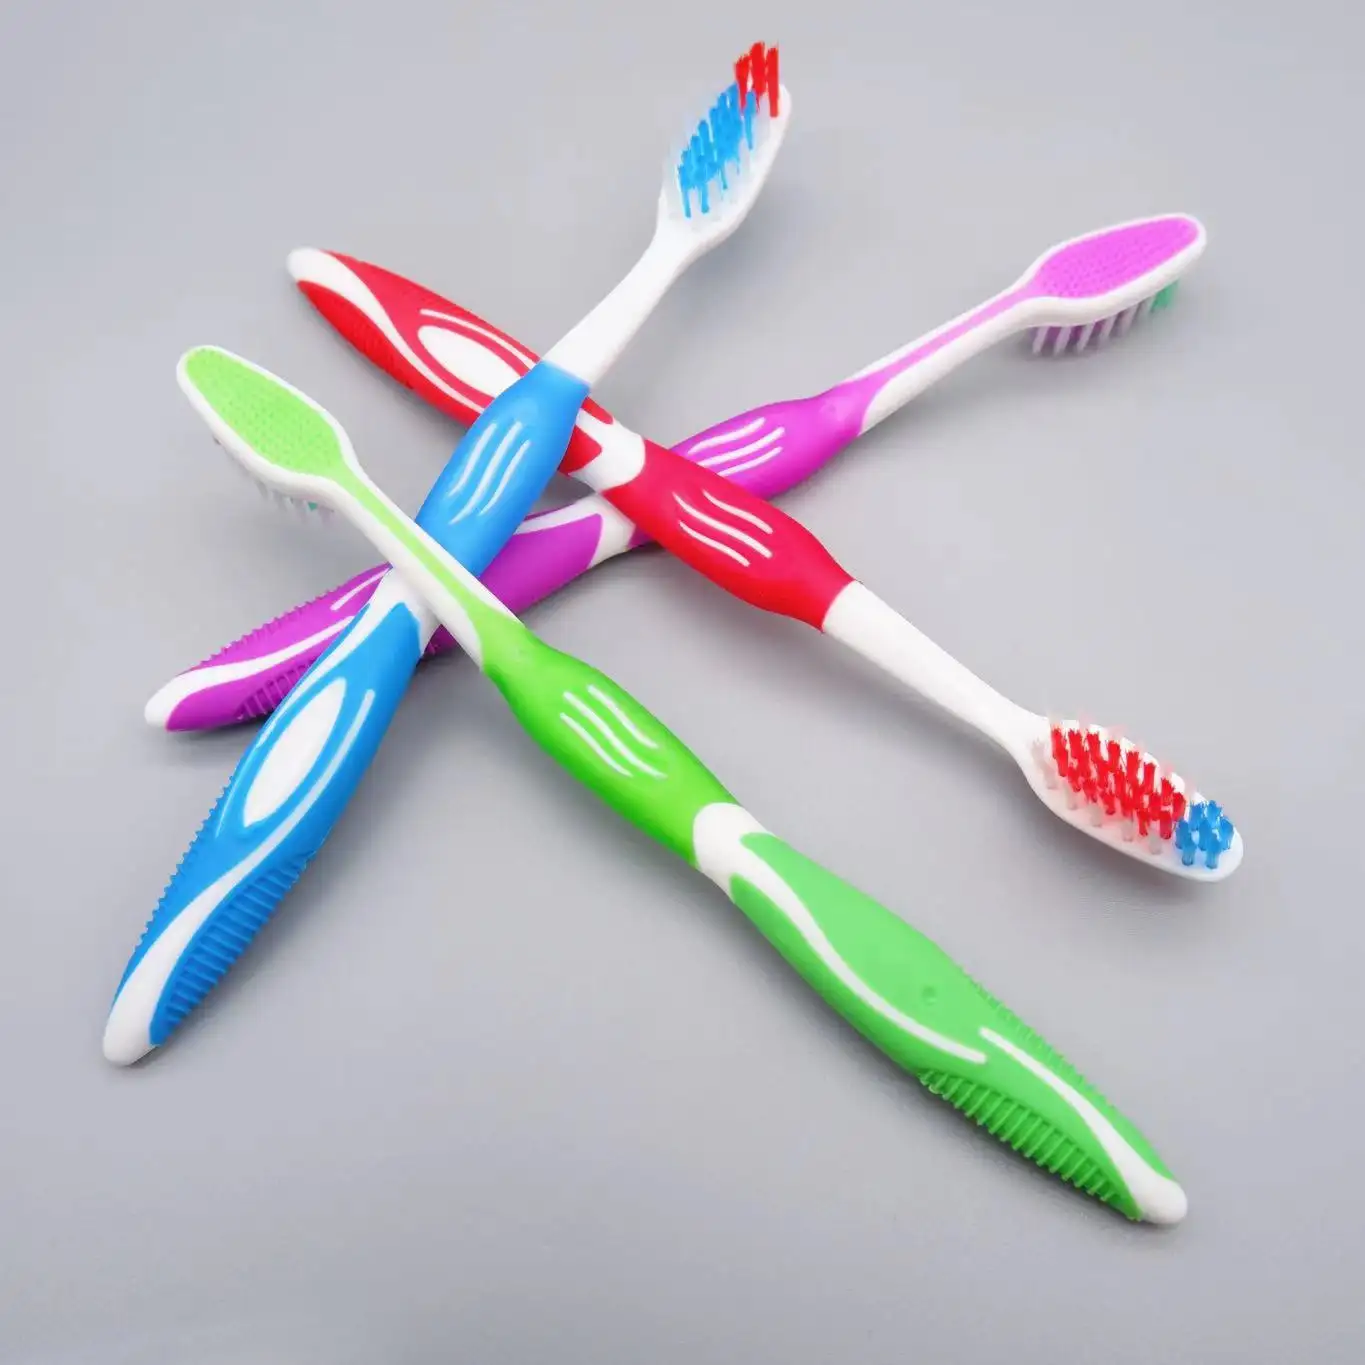 Wholesale dental brush toothbrush teeth whitening kit colorful bristle bright handle adult toothbrush